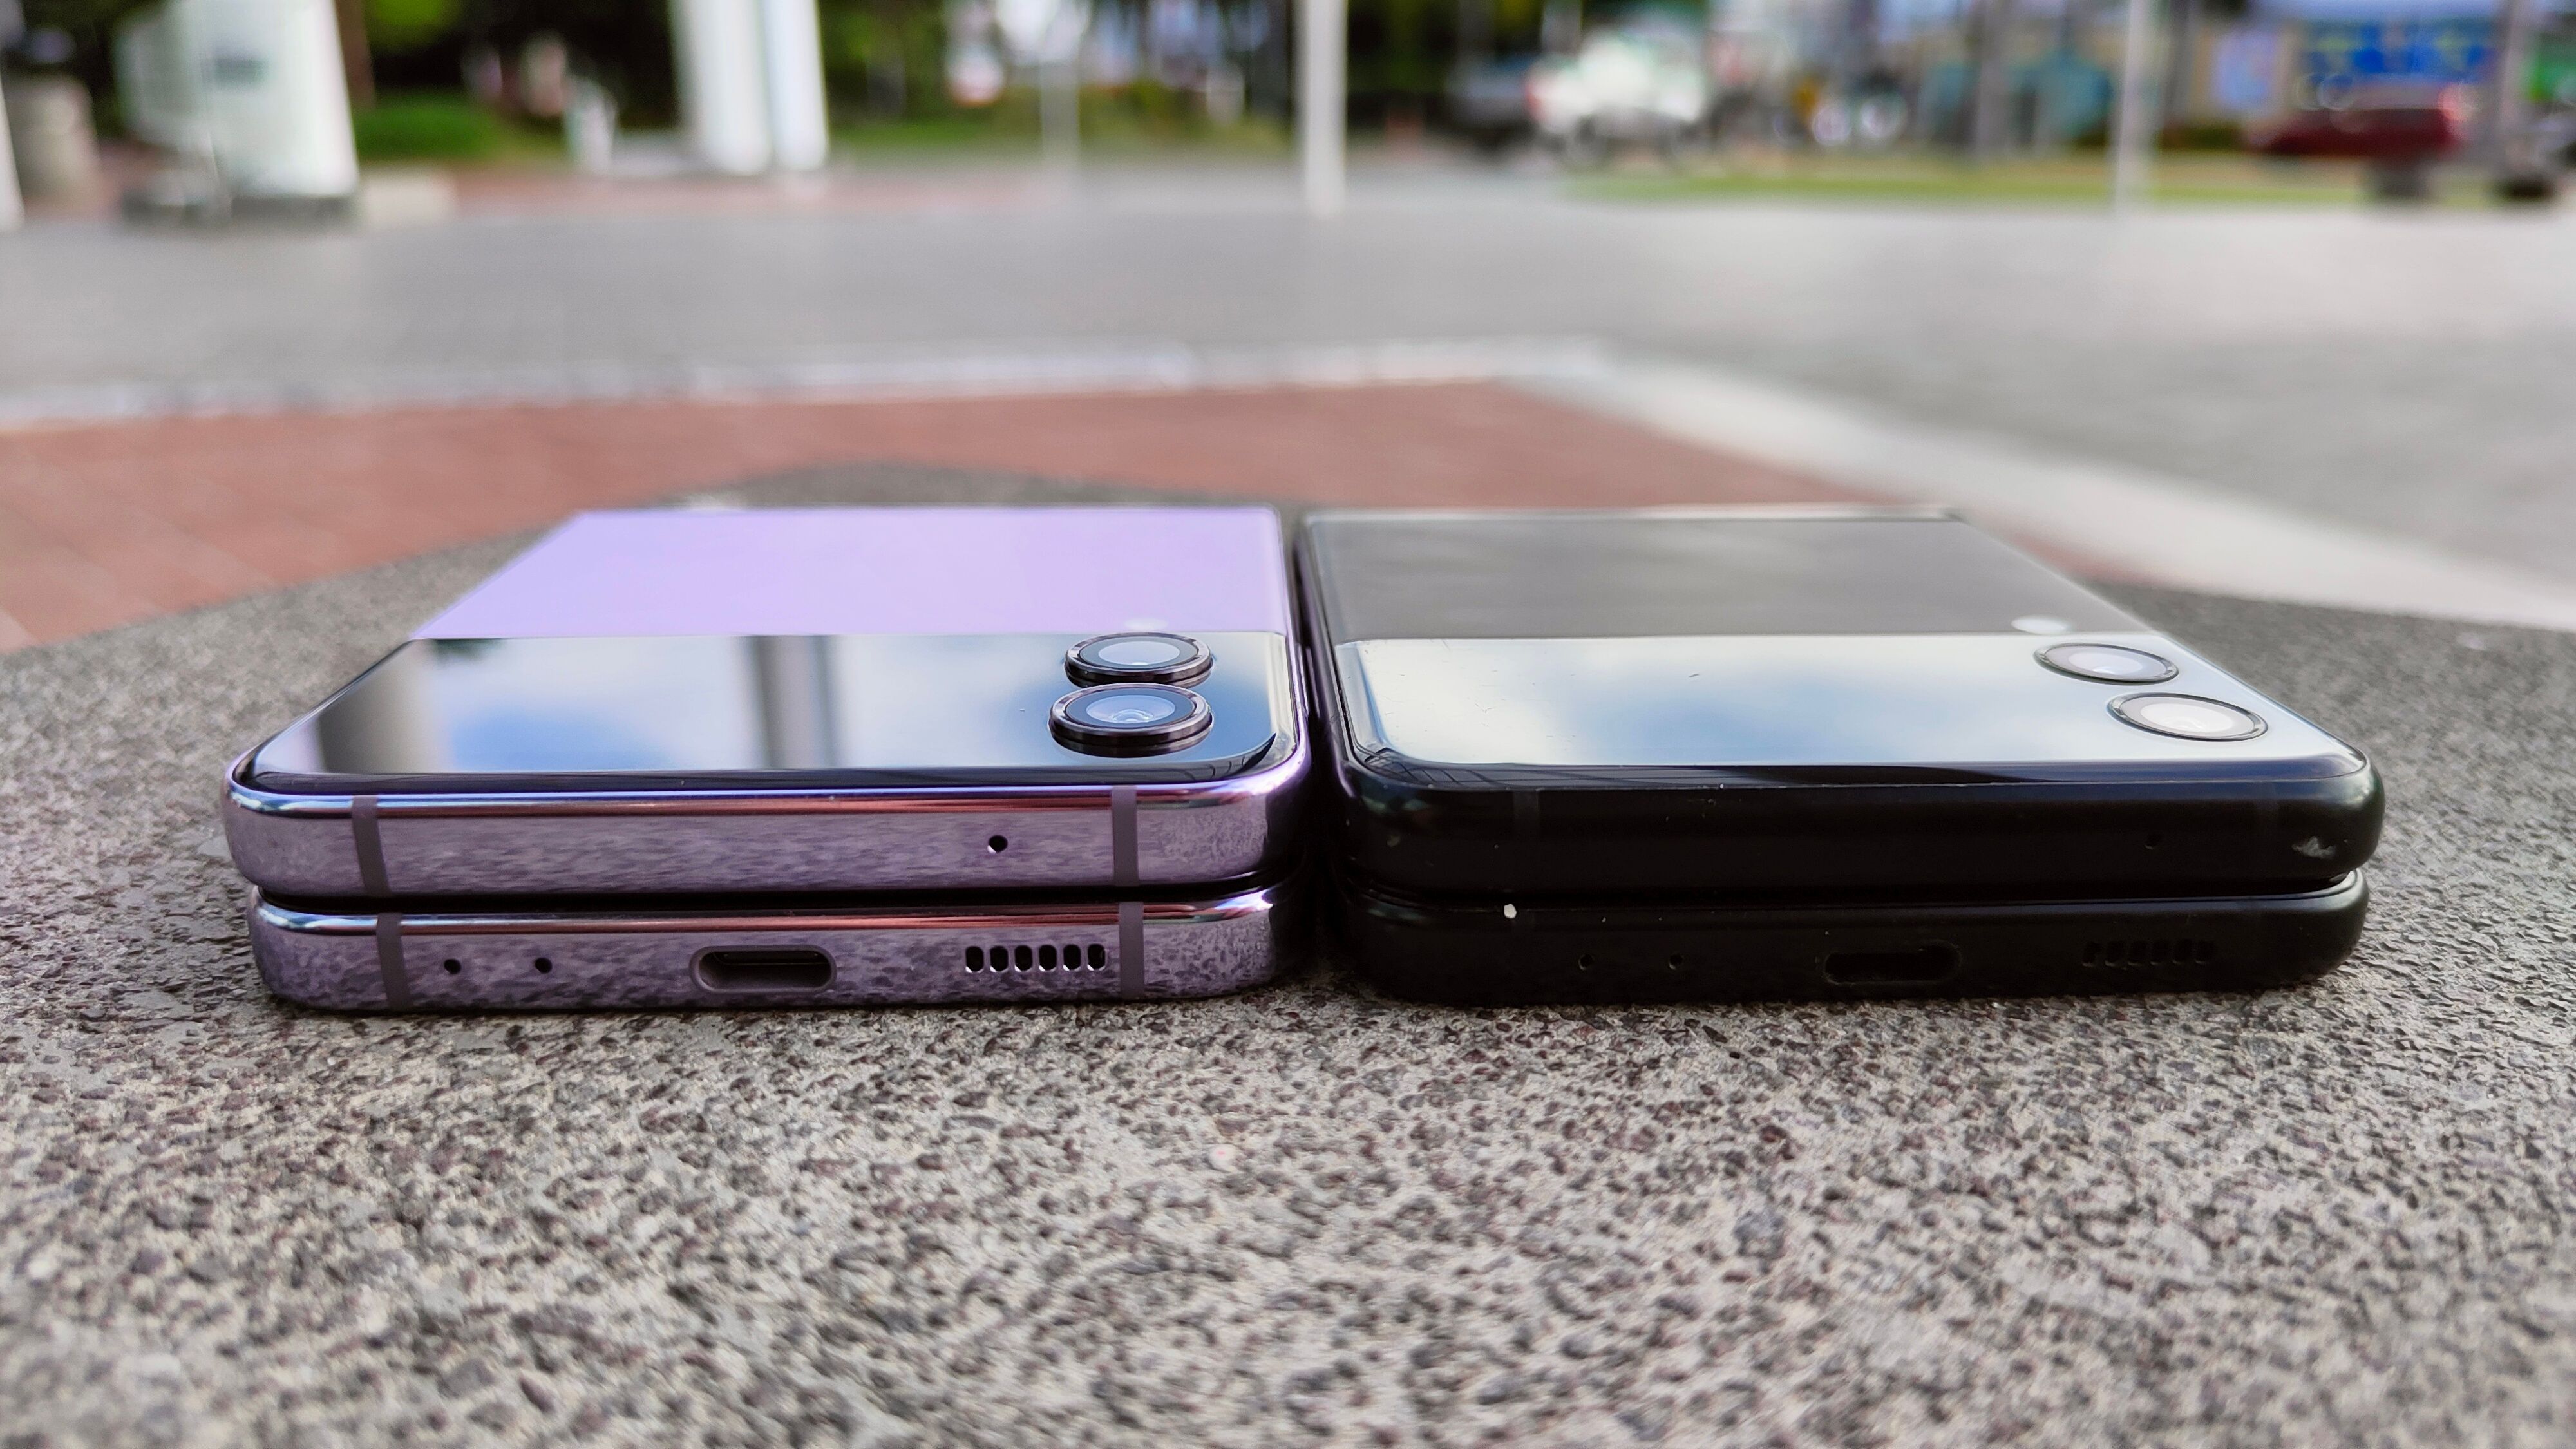 Samsung Galaxy Z Flip4 vs. iPhone Review 2022